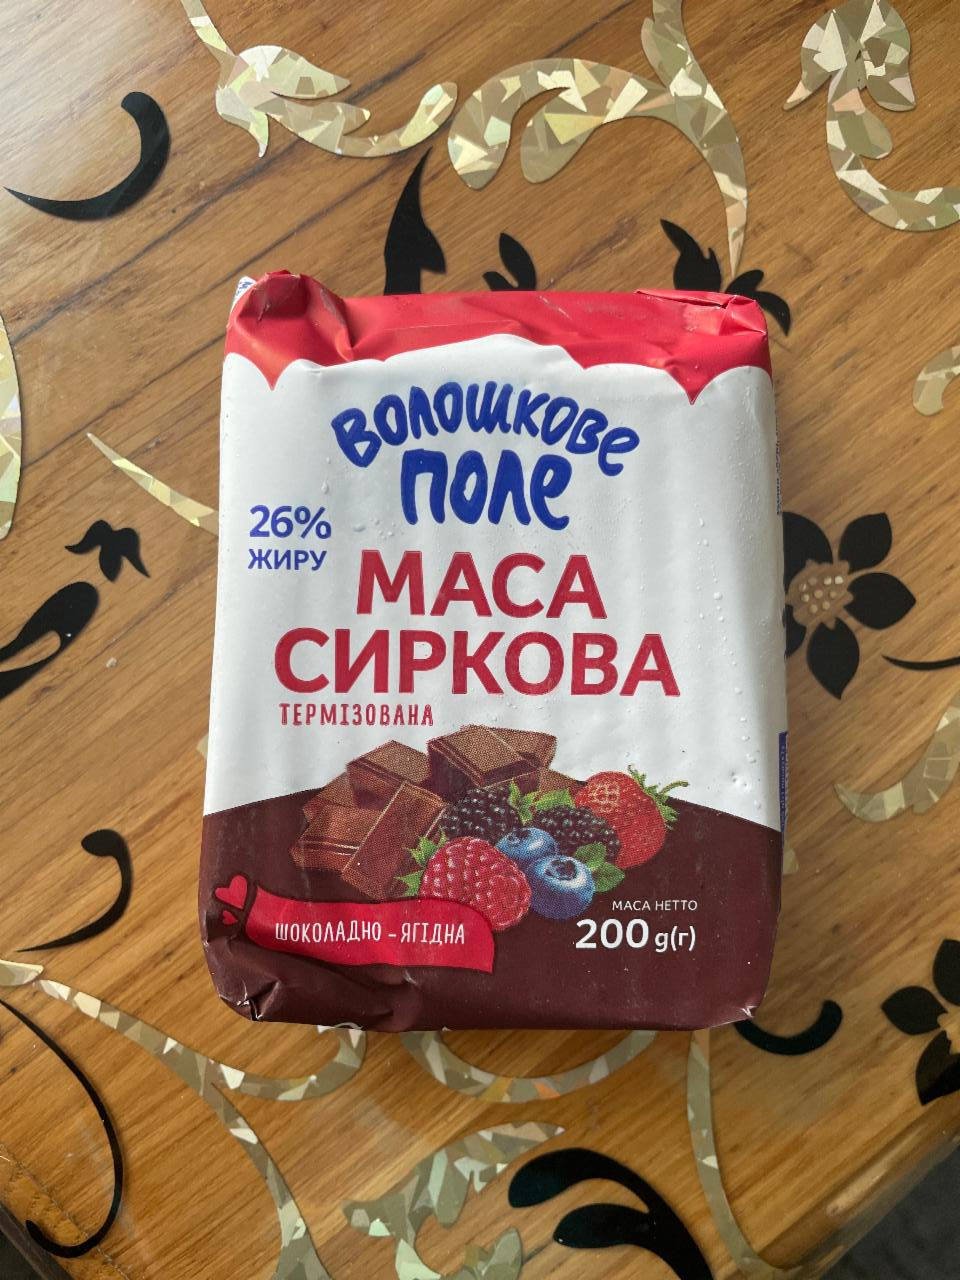 Фото - Маса сиркова 26% шоколадно-ягідна Волошкове поле